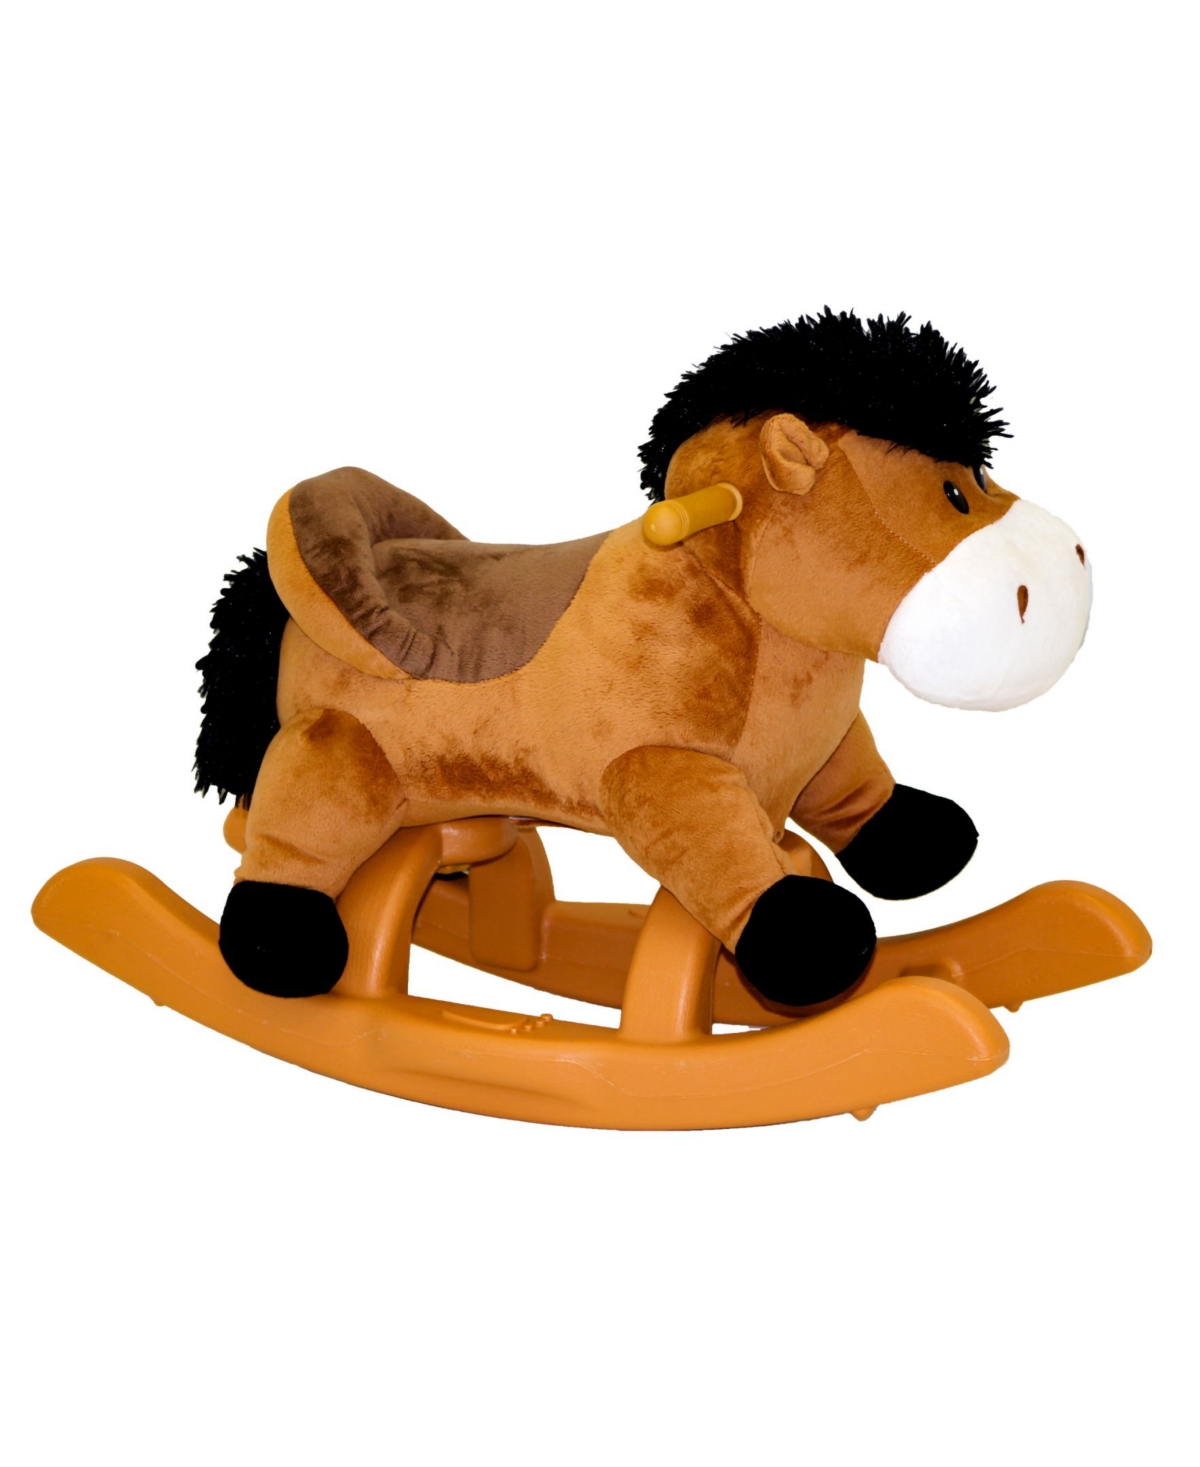 Ponyland Kids' 24" Rocking Horse With Sound In Brown